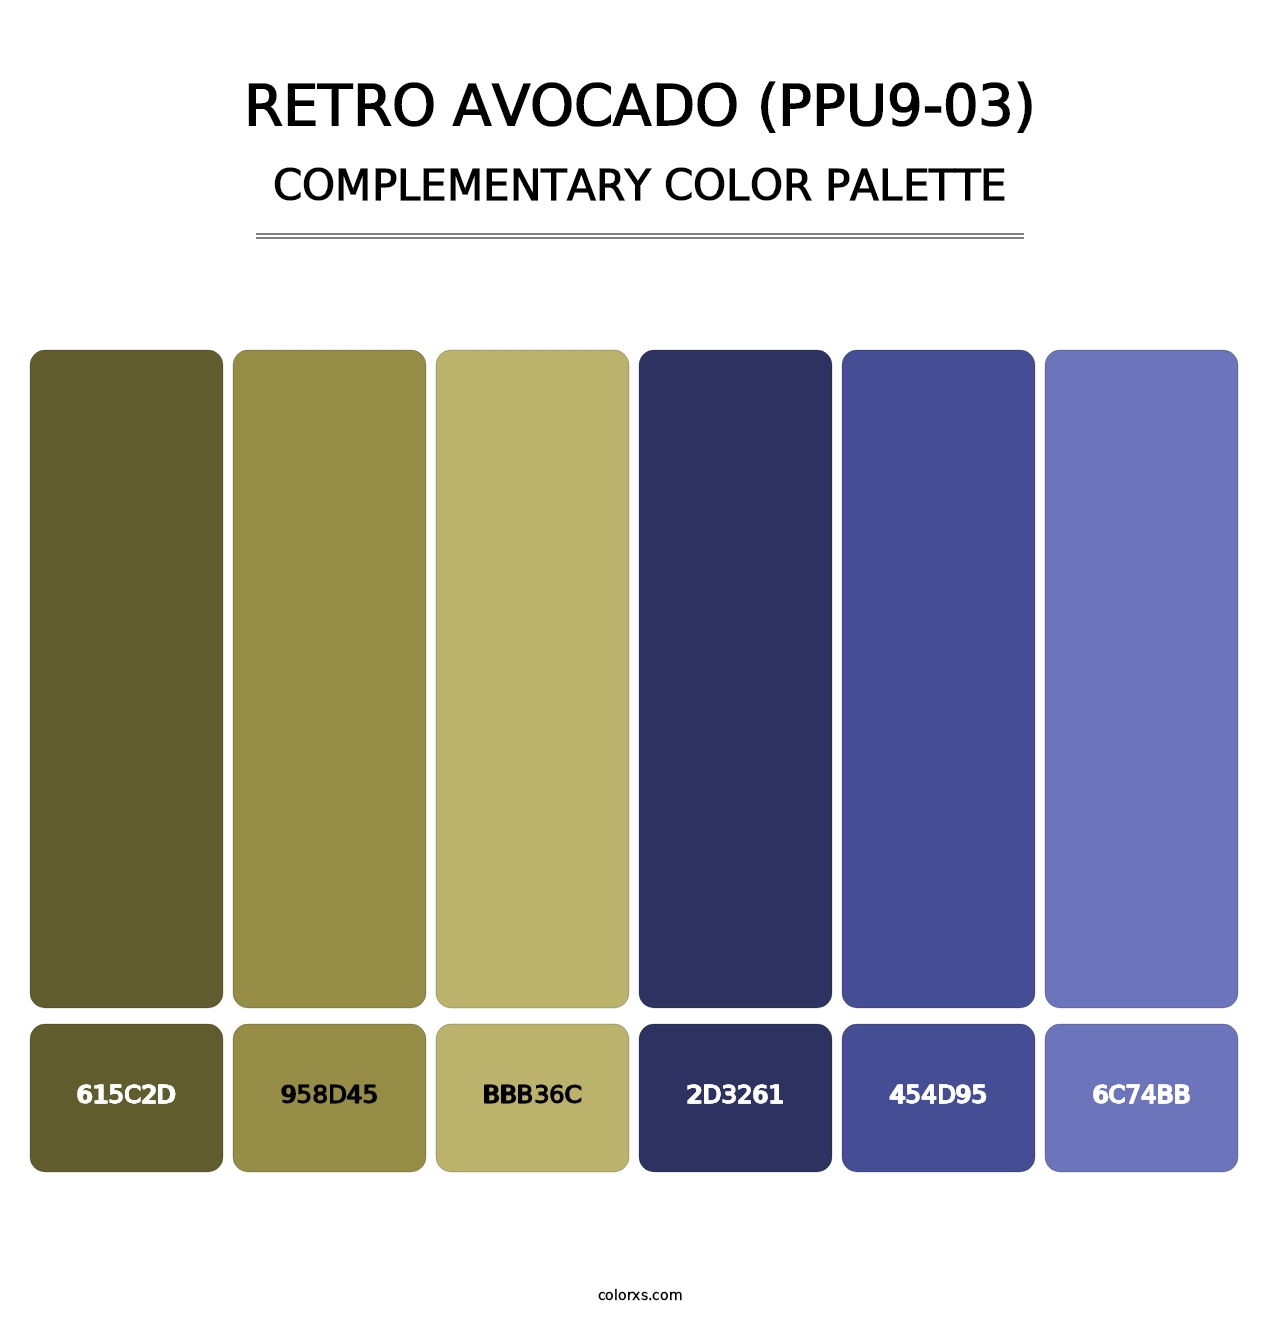 Retro Avocado (PPU9-03) - Complementary Color Palette